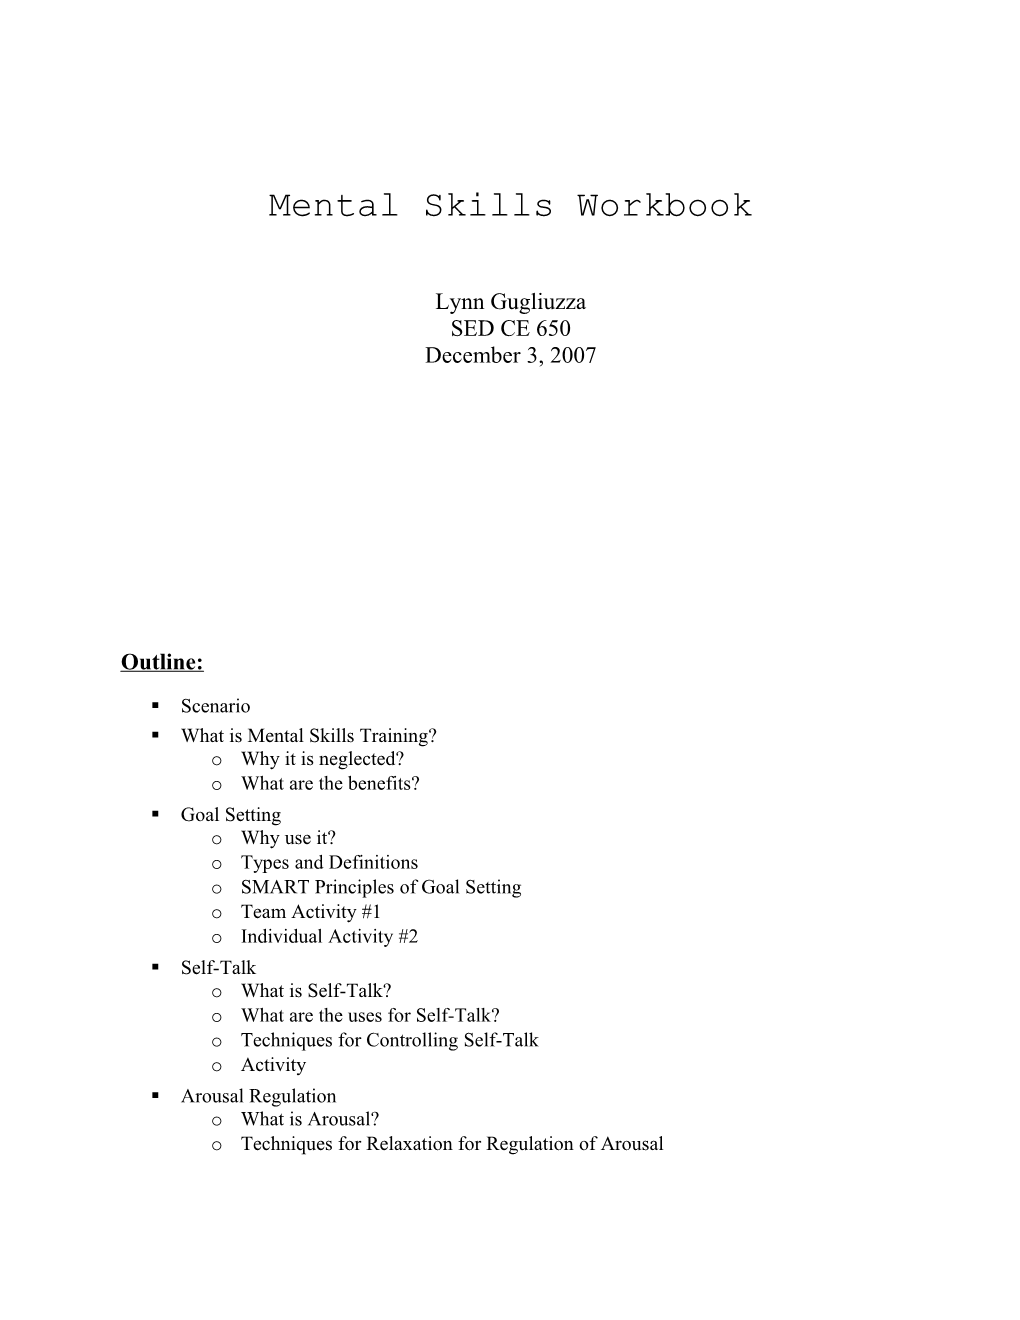 Mental Skills Workbook